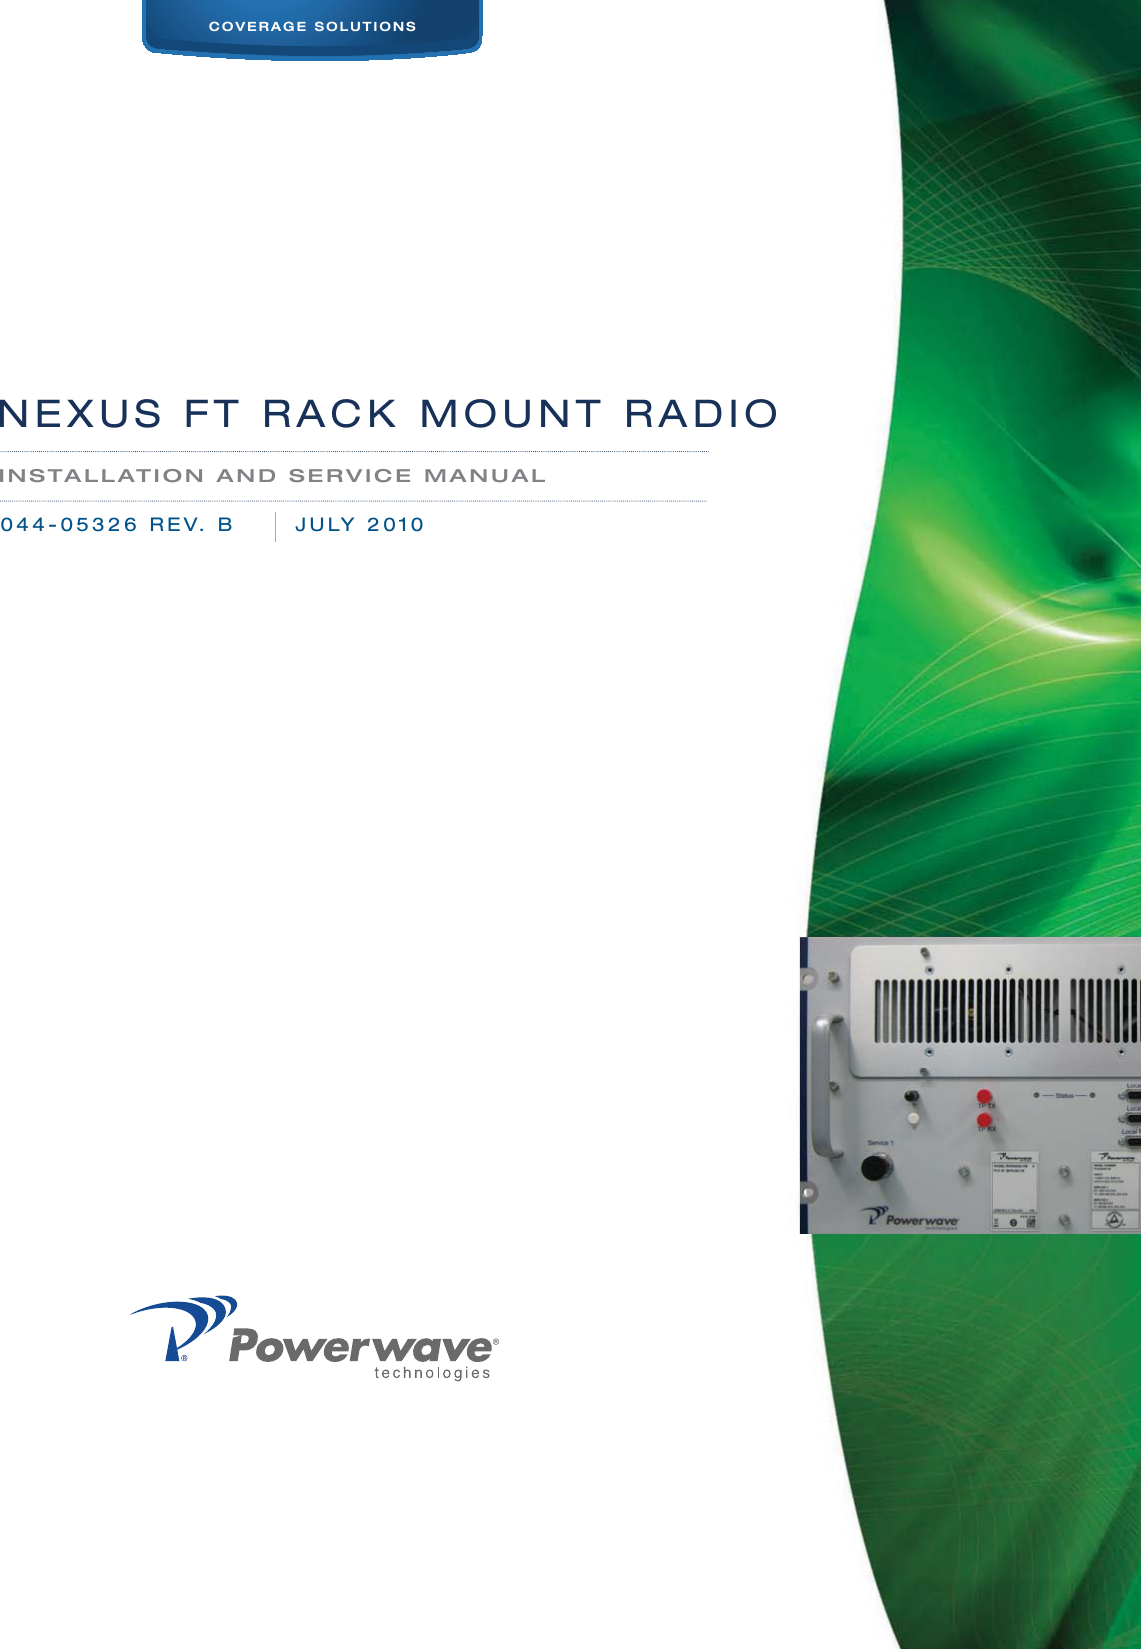 COVERAGE SOLUTIONSINSTALLATION AND SERVICE MANUAL044-05326 REV. B   JULY 2010 NEXUS FT RACK MOUNT RADIO      